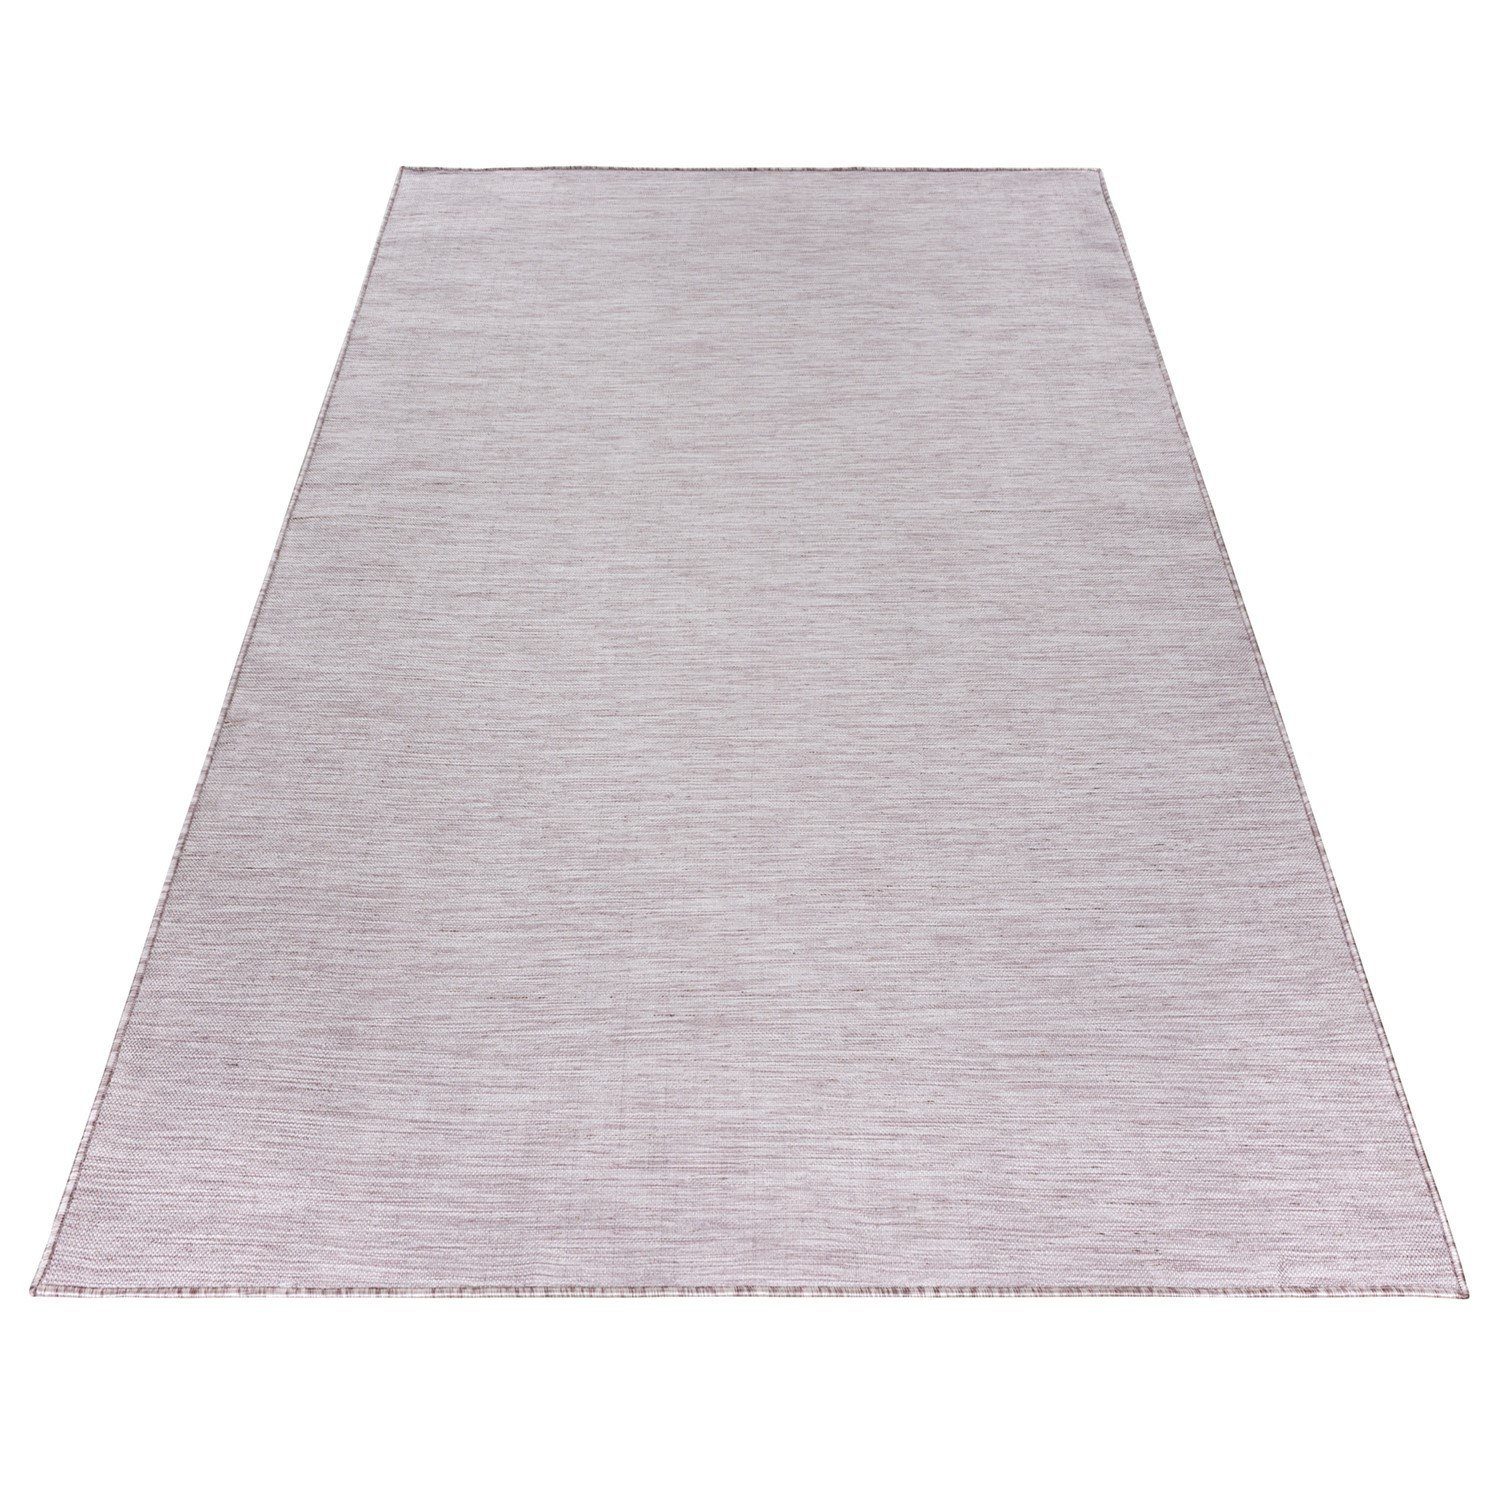 Indoor Miovani Outdoorteppich Sisal-Look Gartenteppich Teppich Pink Outdoorteppich,